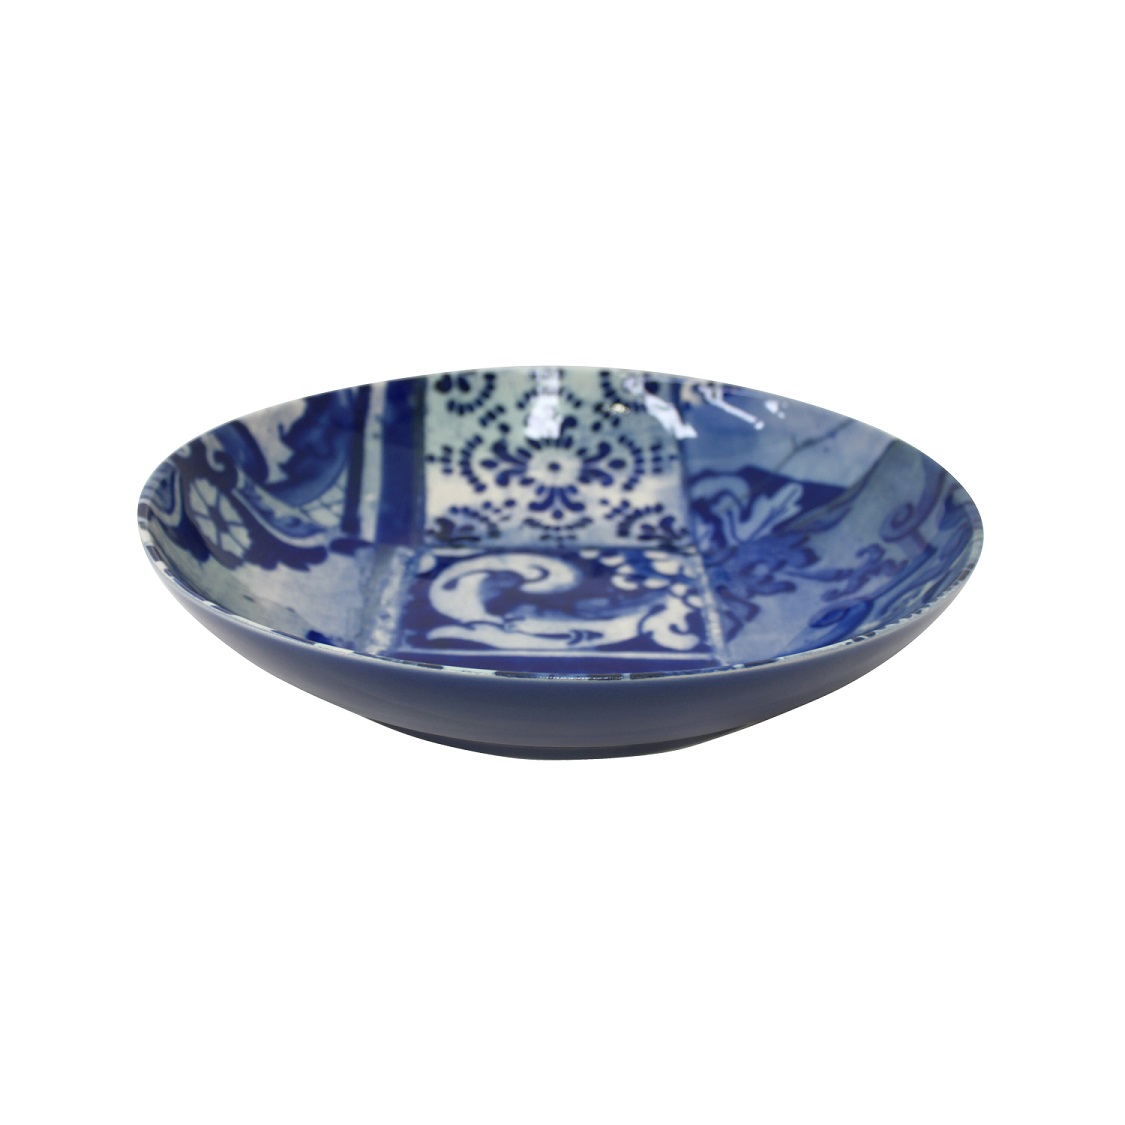 Lisboa Blue Tiles Pasta/serving Bowl 34cm Gift